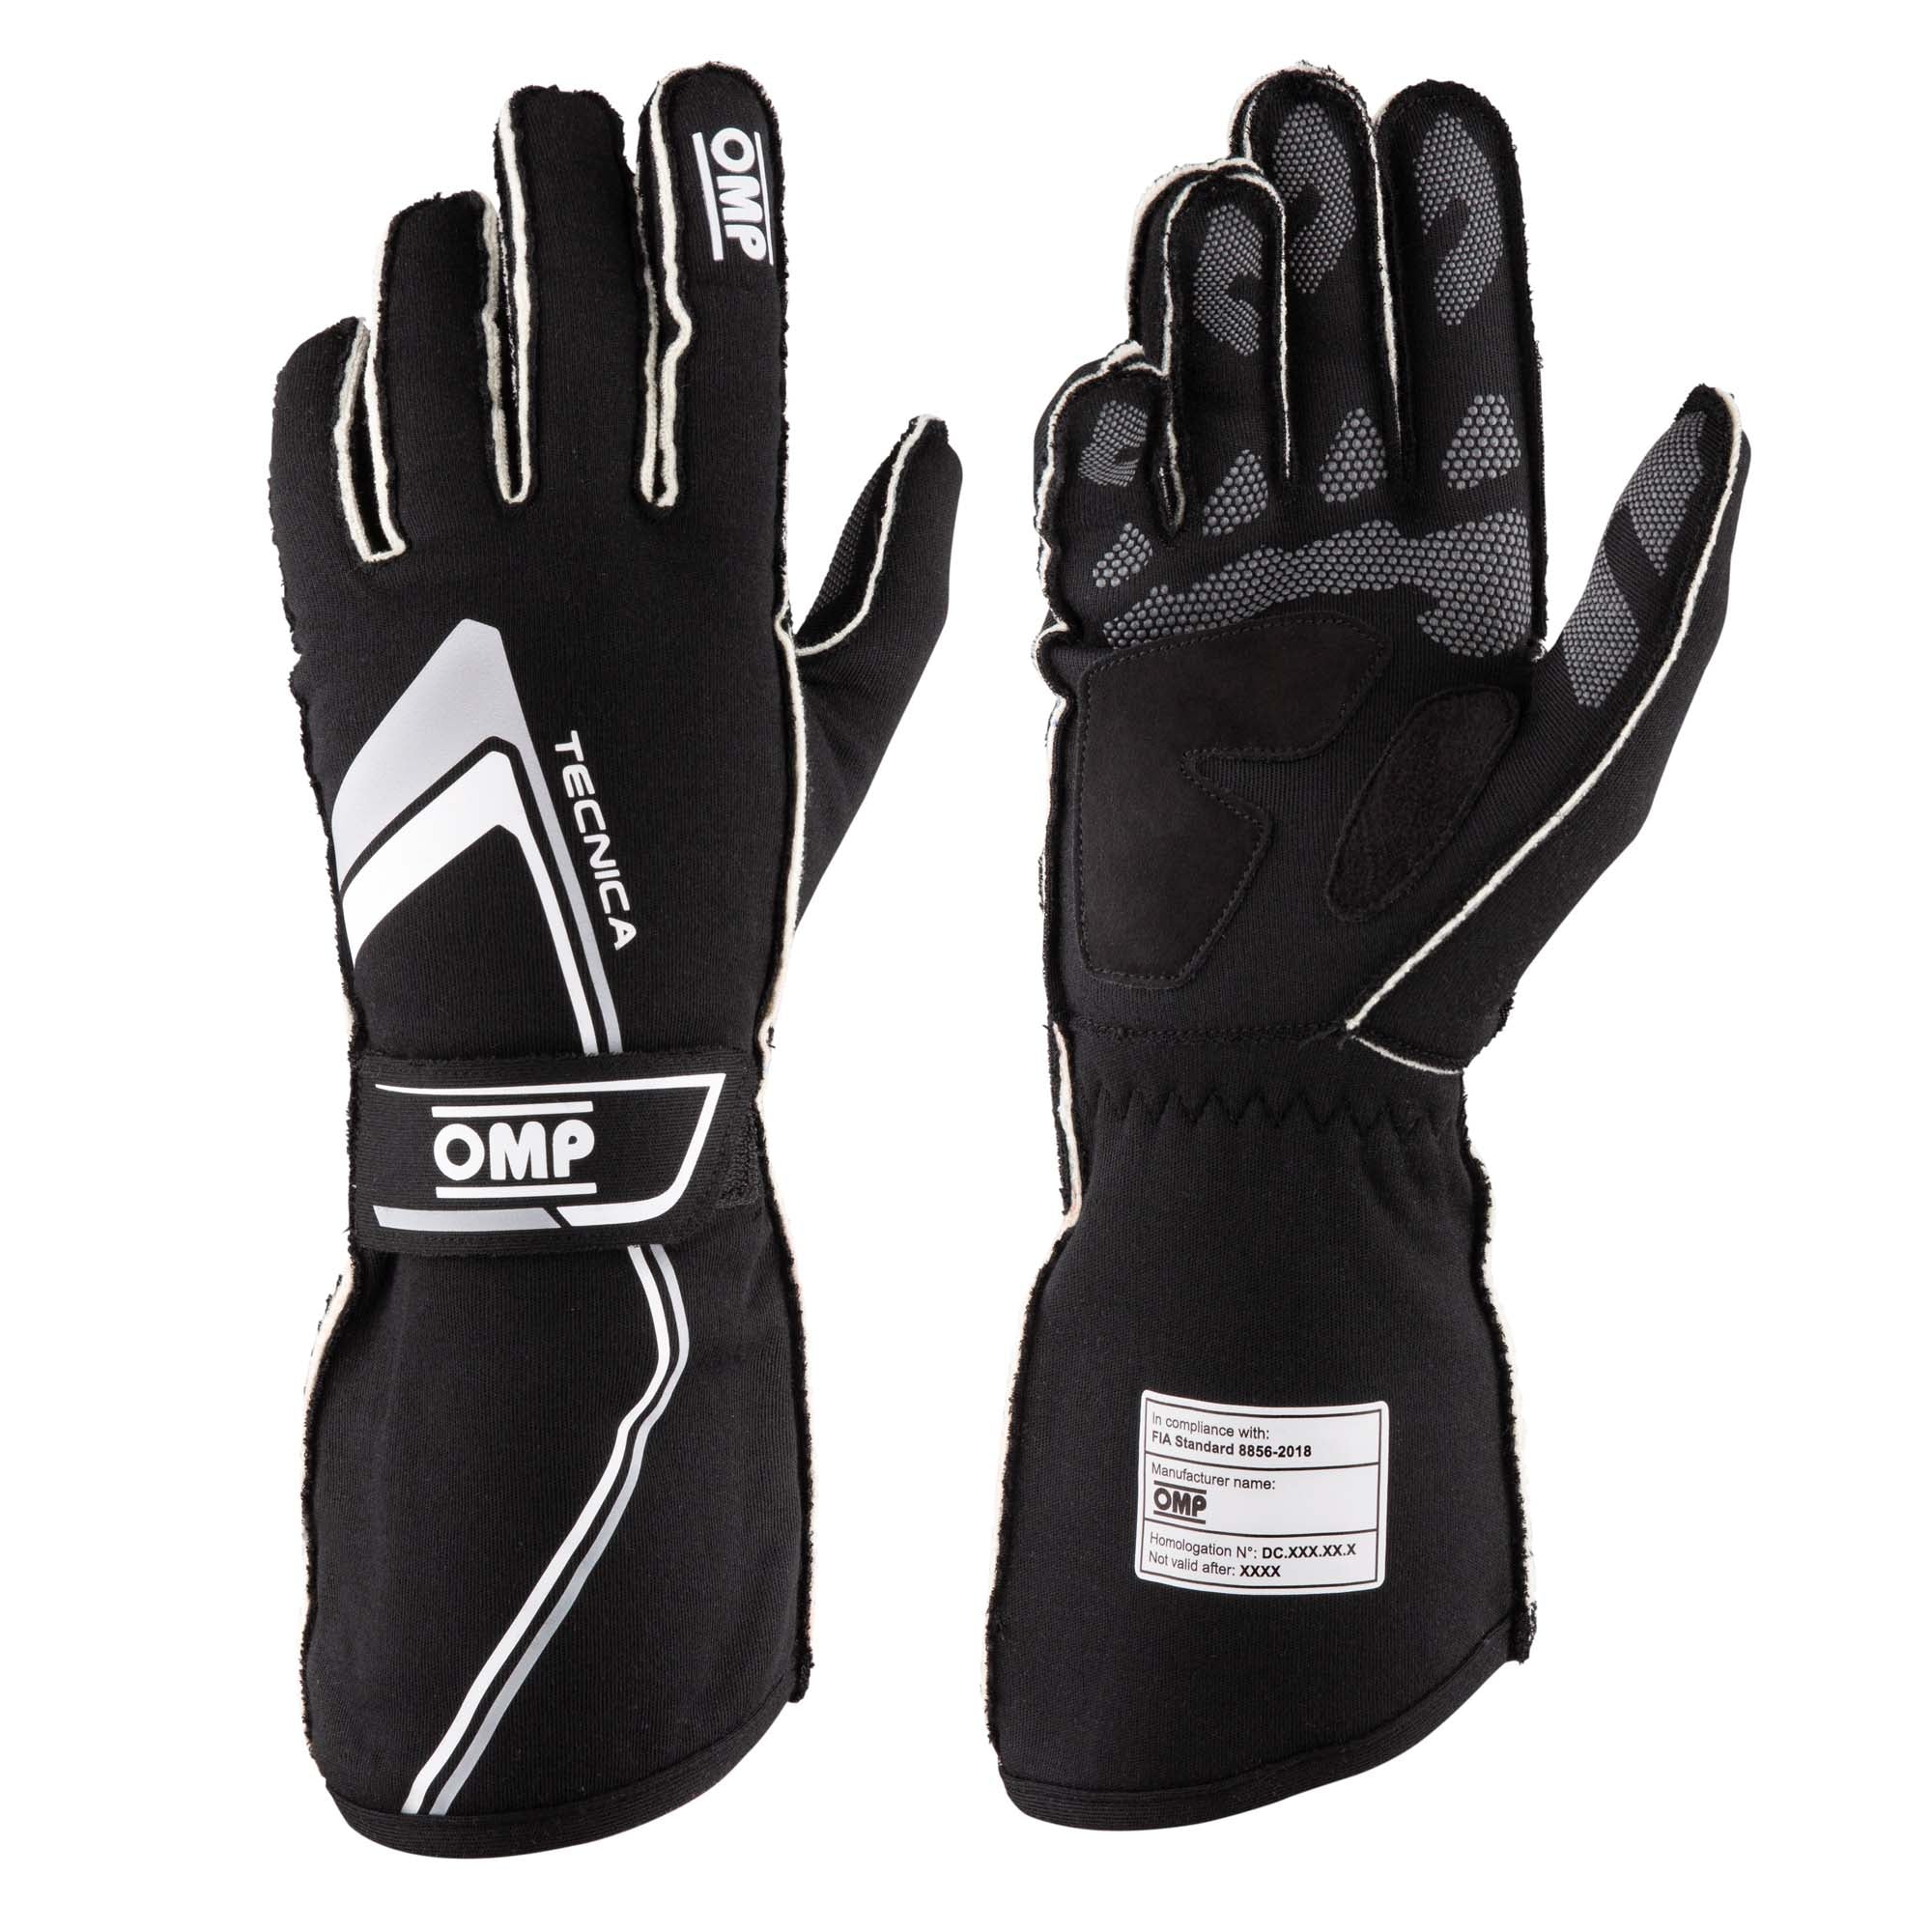 OMP Tecnica Racing Gloves